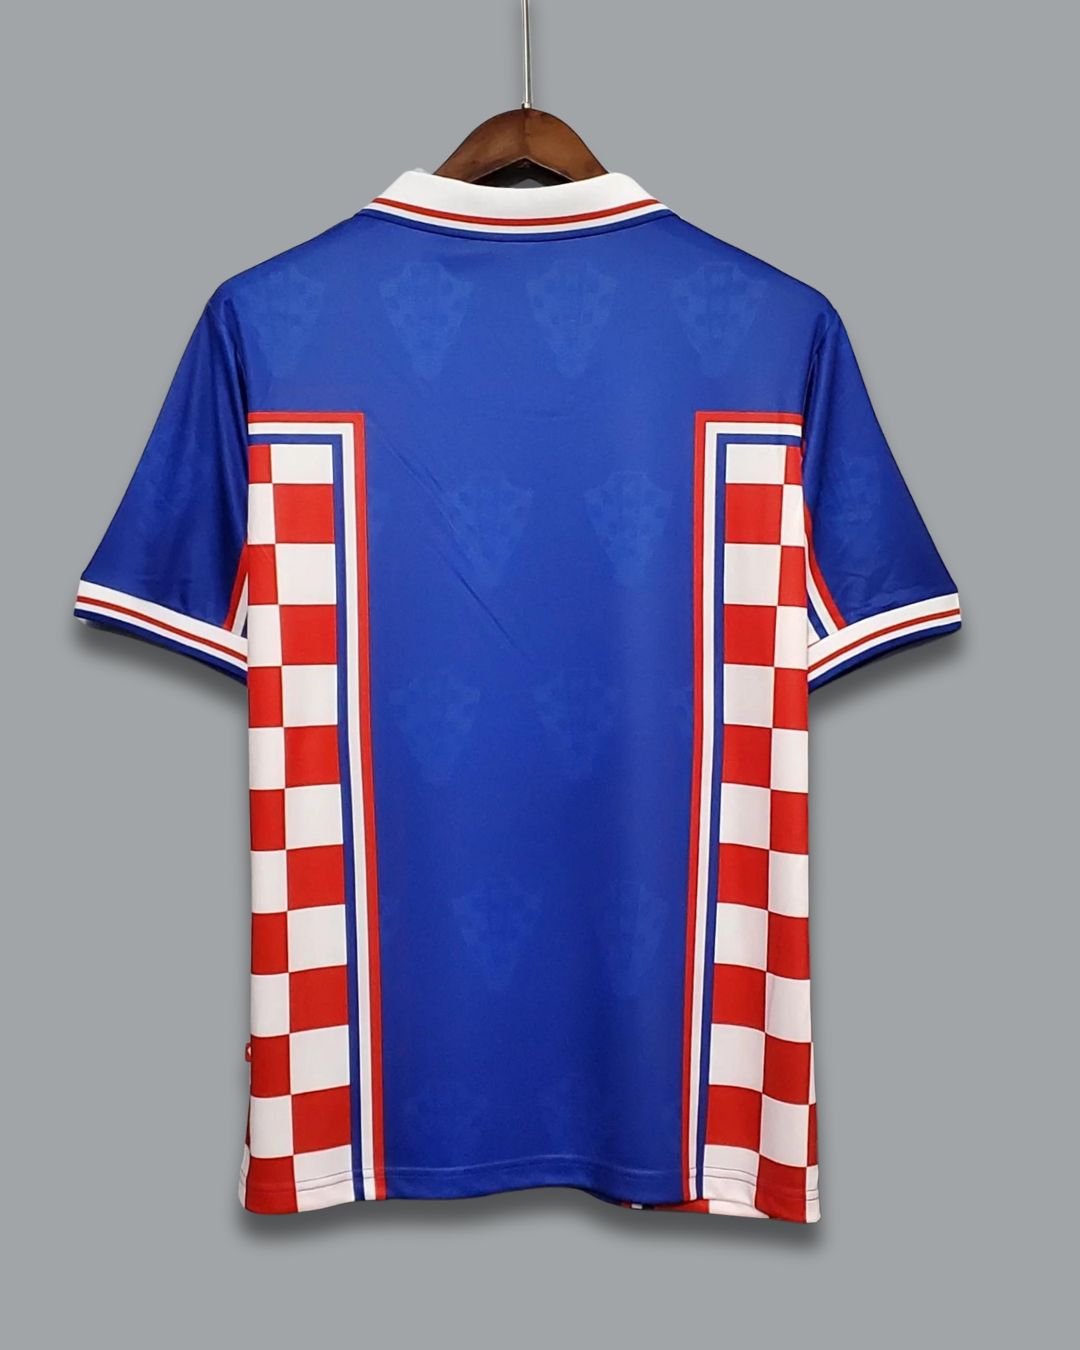 Croatia 1998 World Cup Kit (Away Kit) - Premium  from CatenaccioDesigns - Just €60.99! Shop now at CatenaccioDesigns